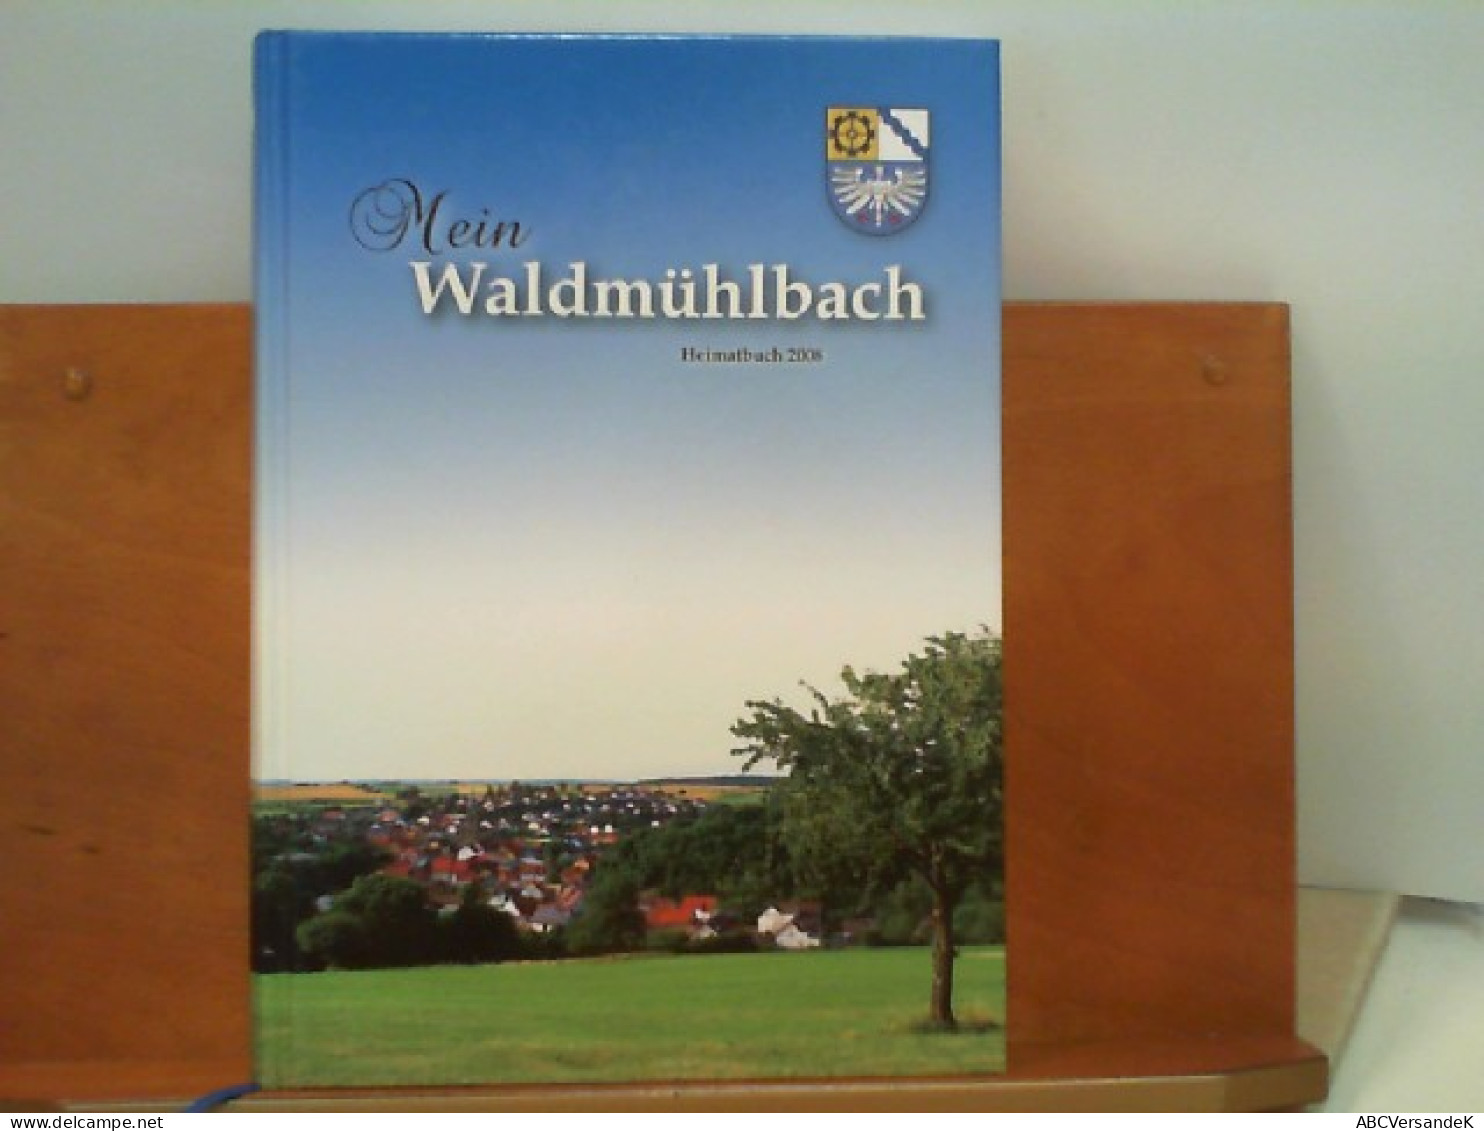 Mein Waldmühlbach - Heimatbuch 2008 - Alemania Todos